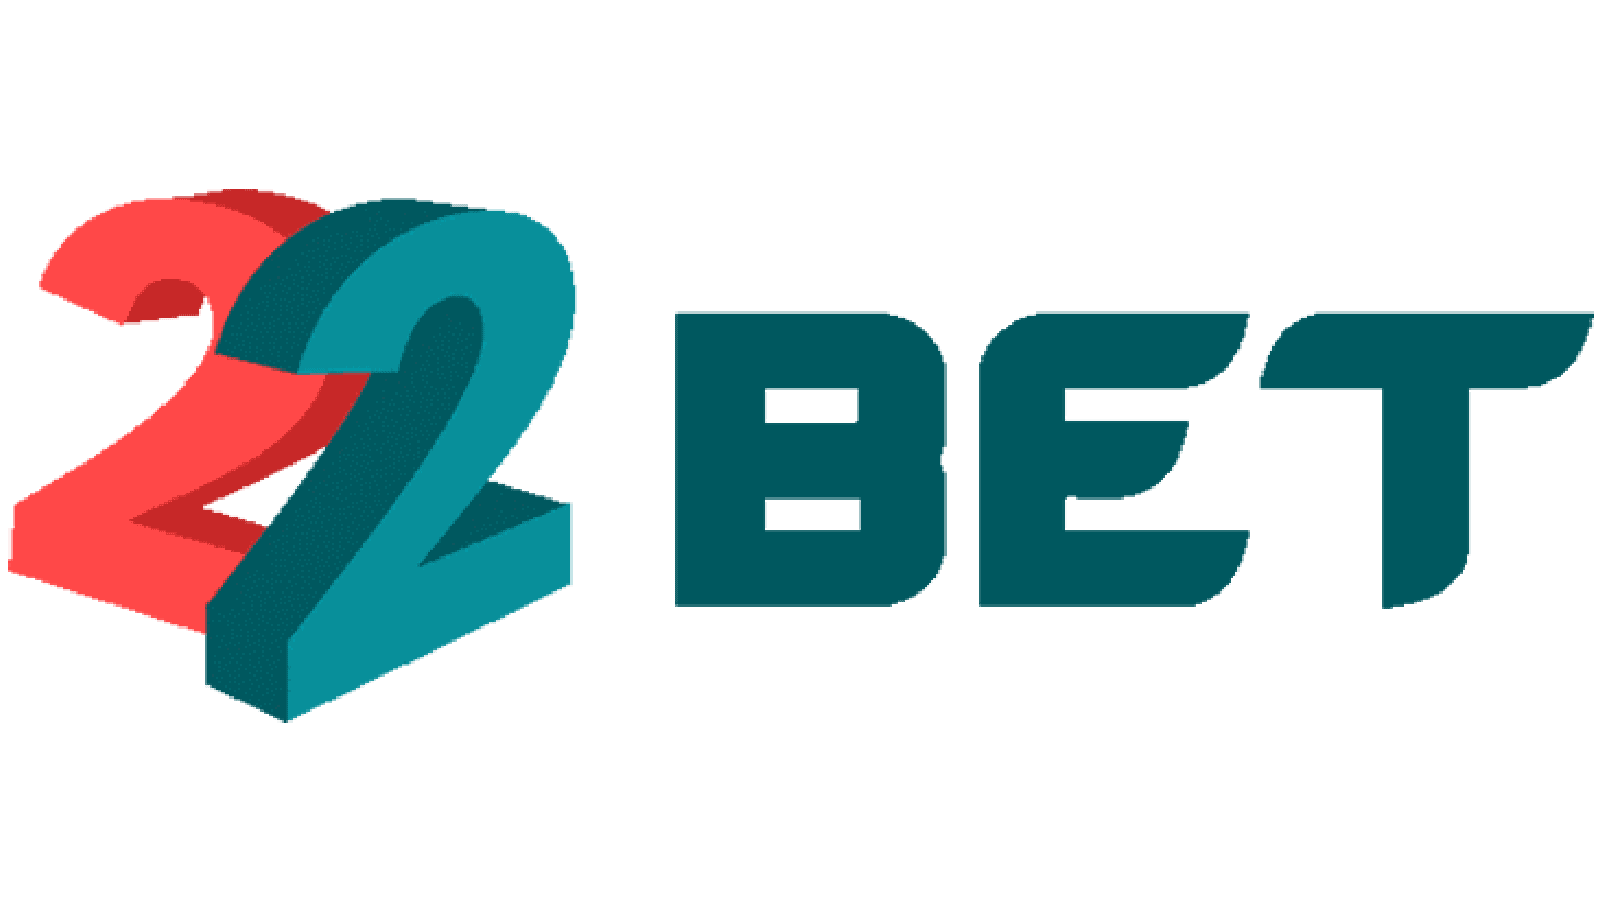 22bet Casino Logo